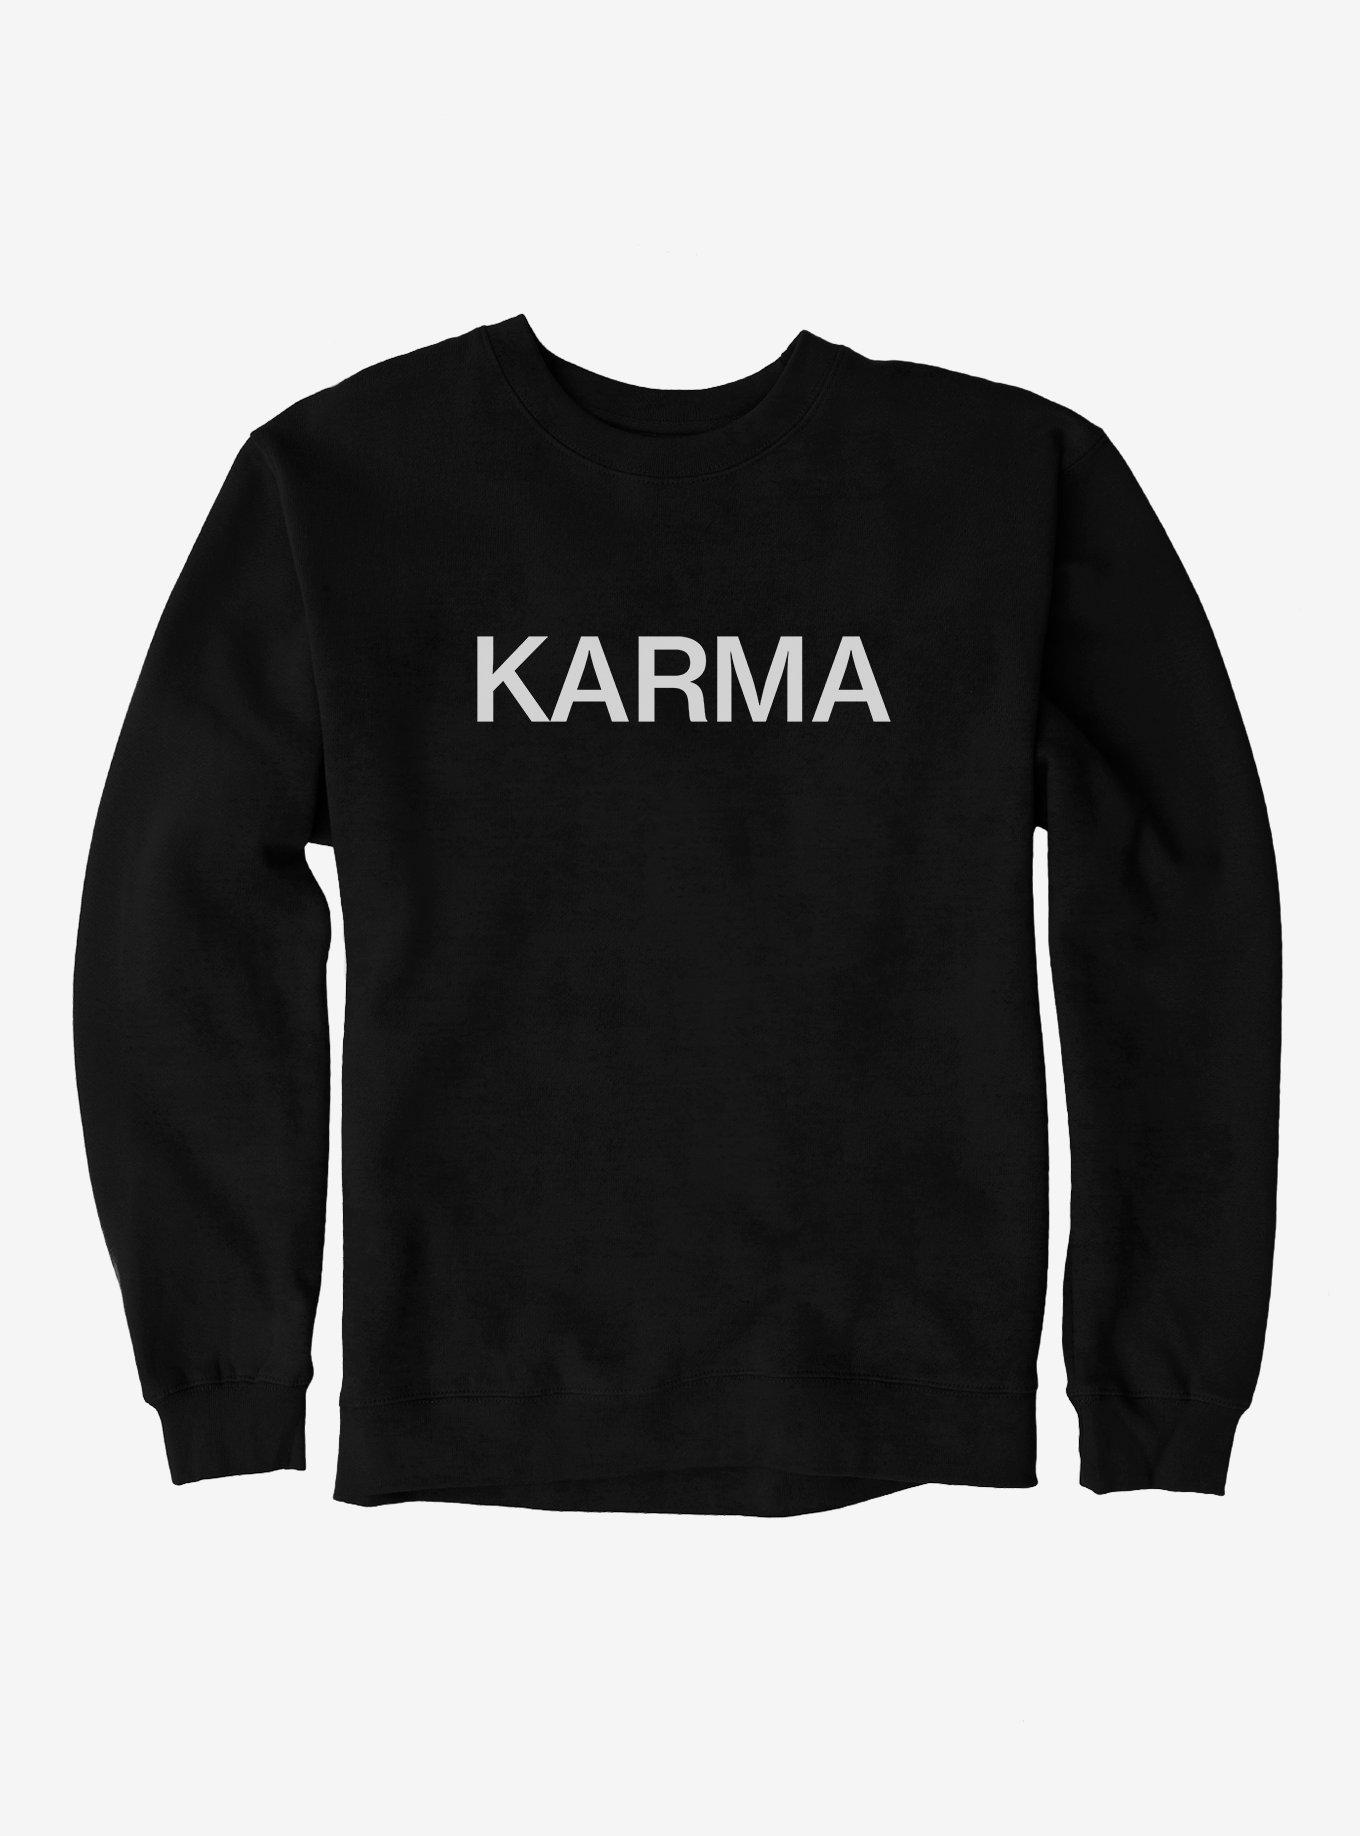 Karma Text Sweatshirt, , hi-res